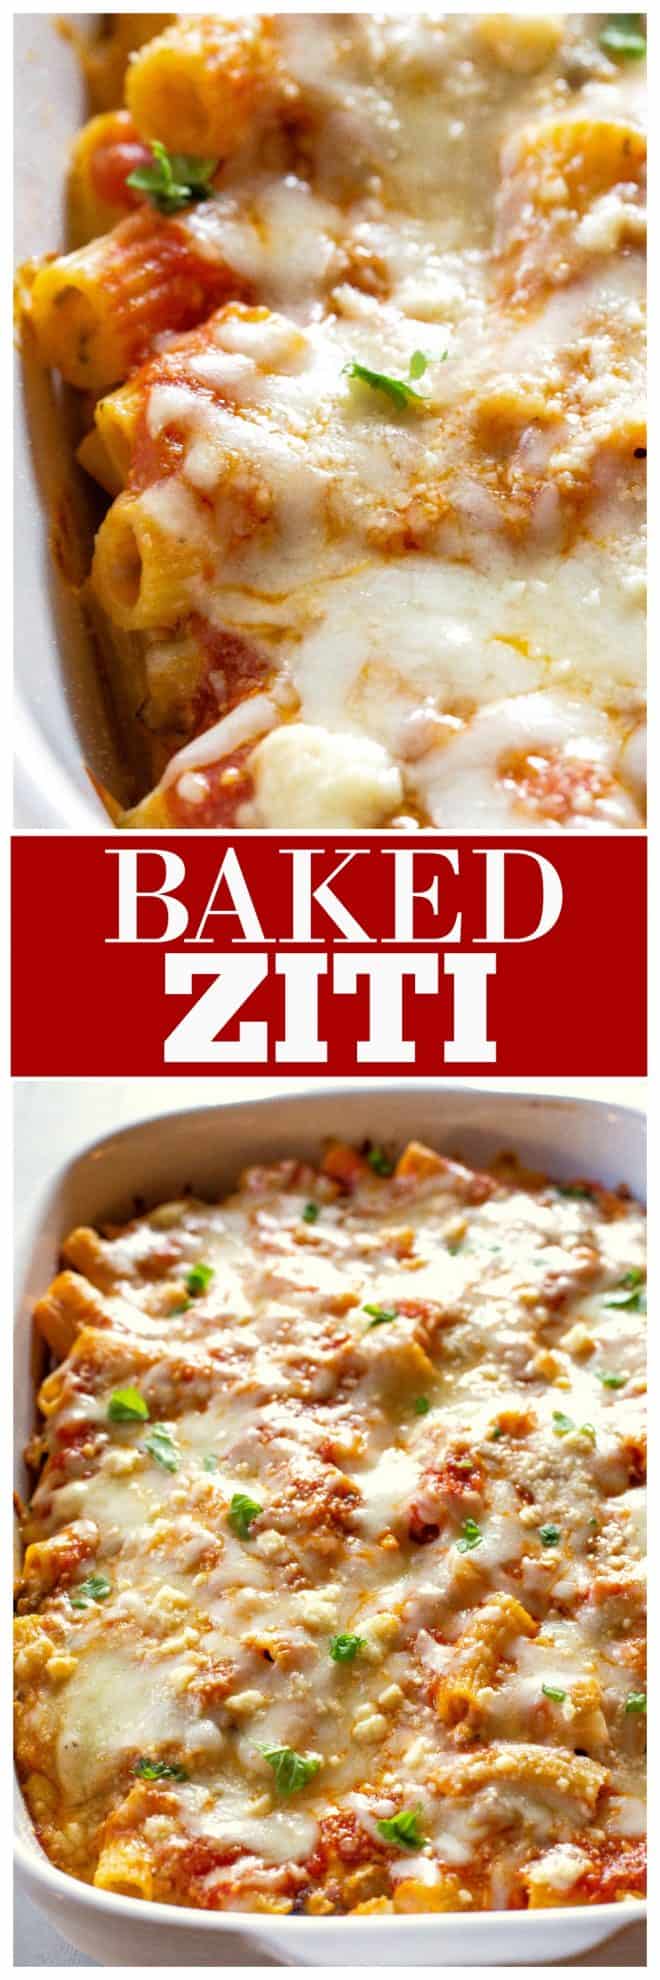 baked ziti casserole - The Best Baked Ziti